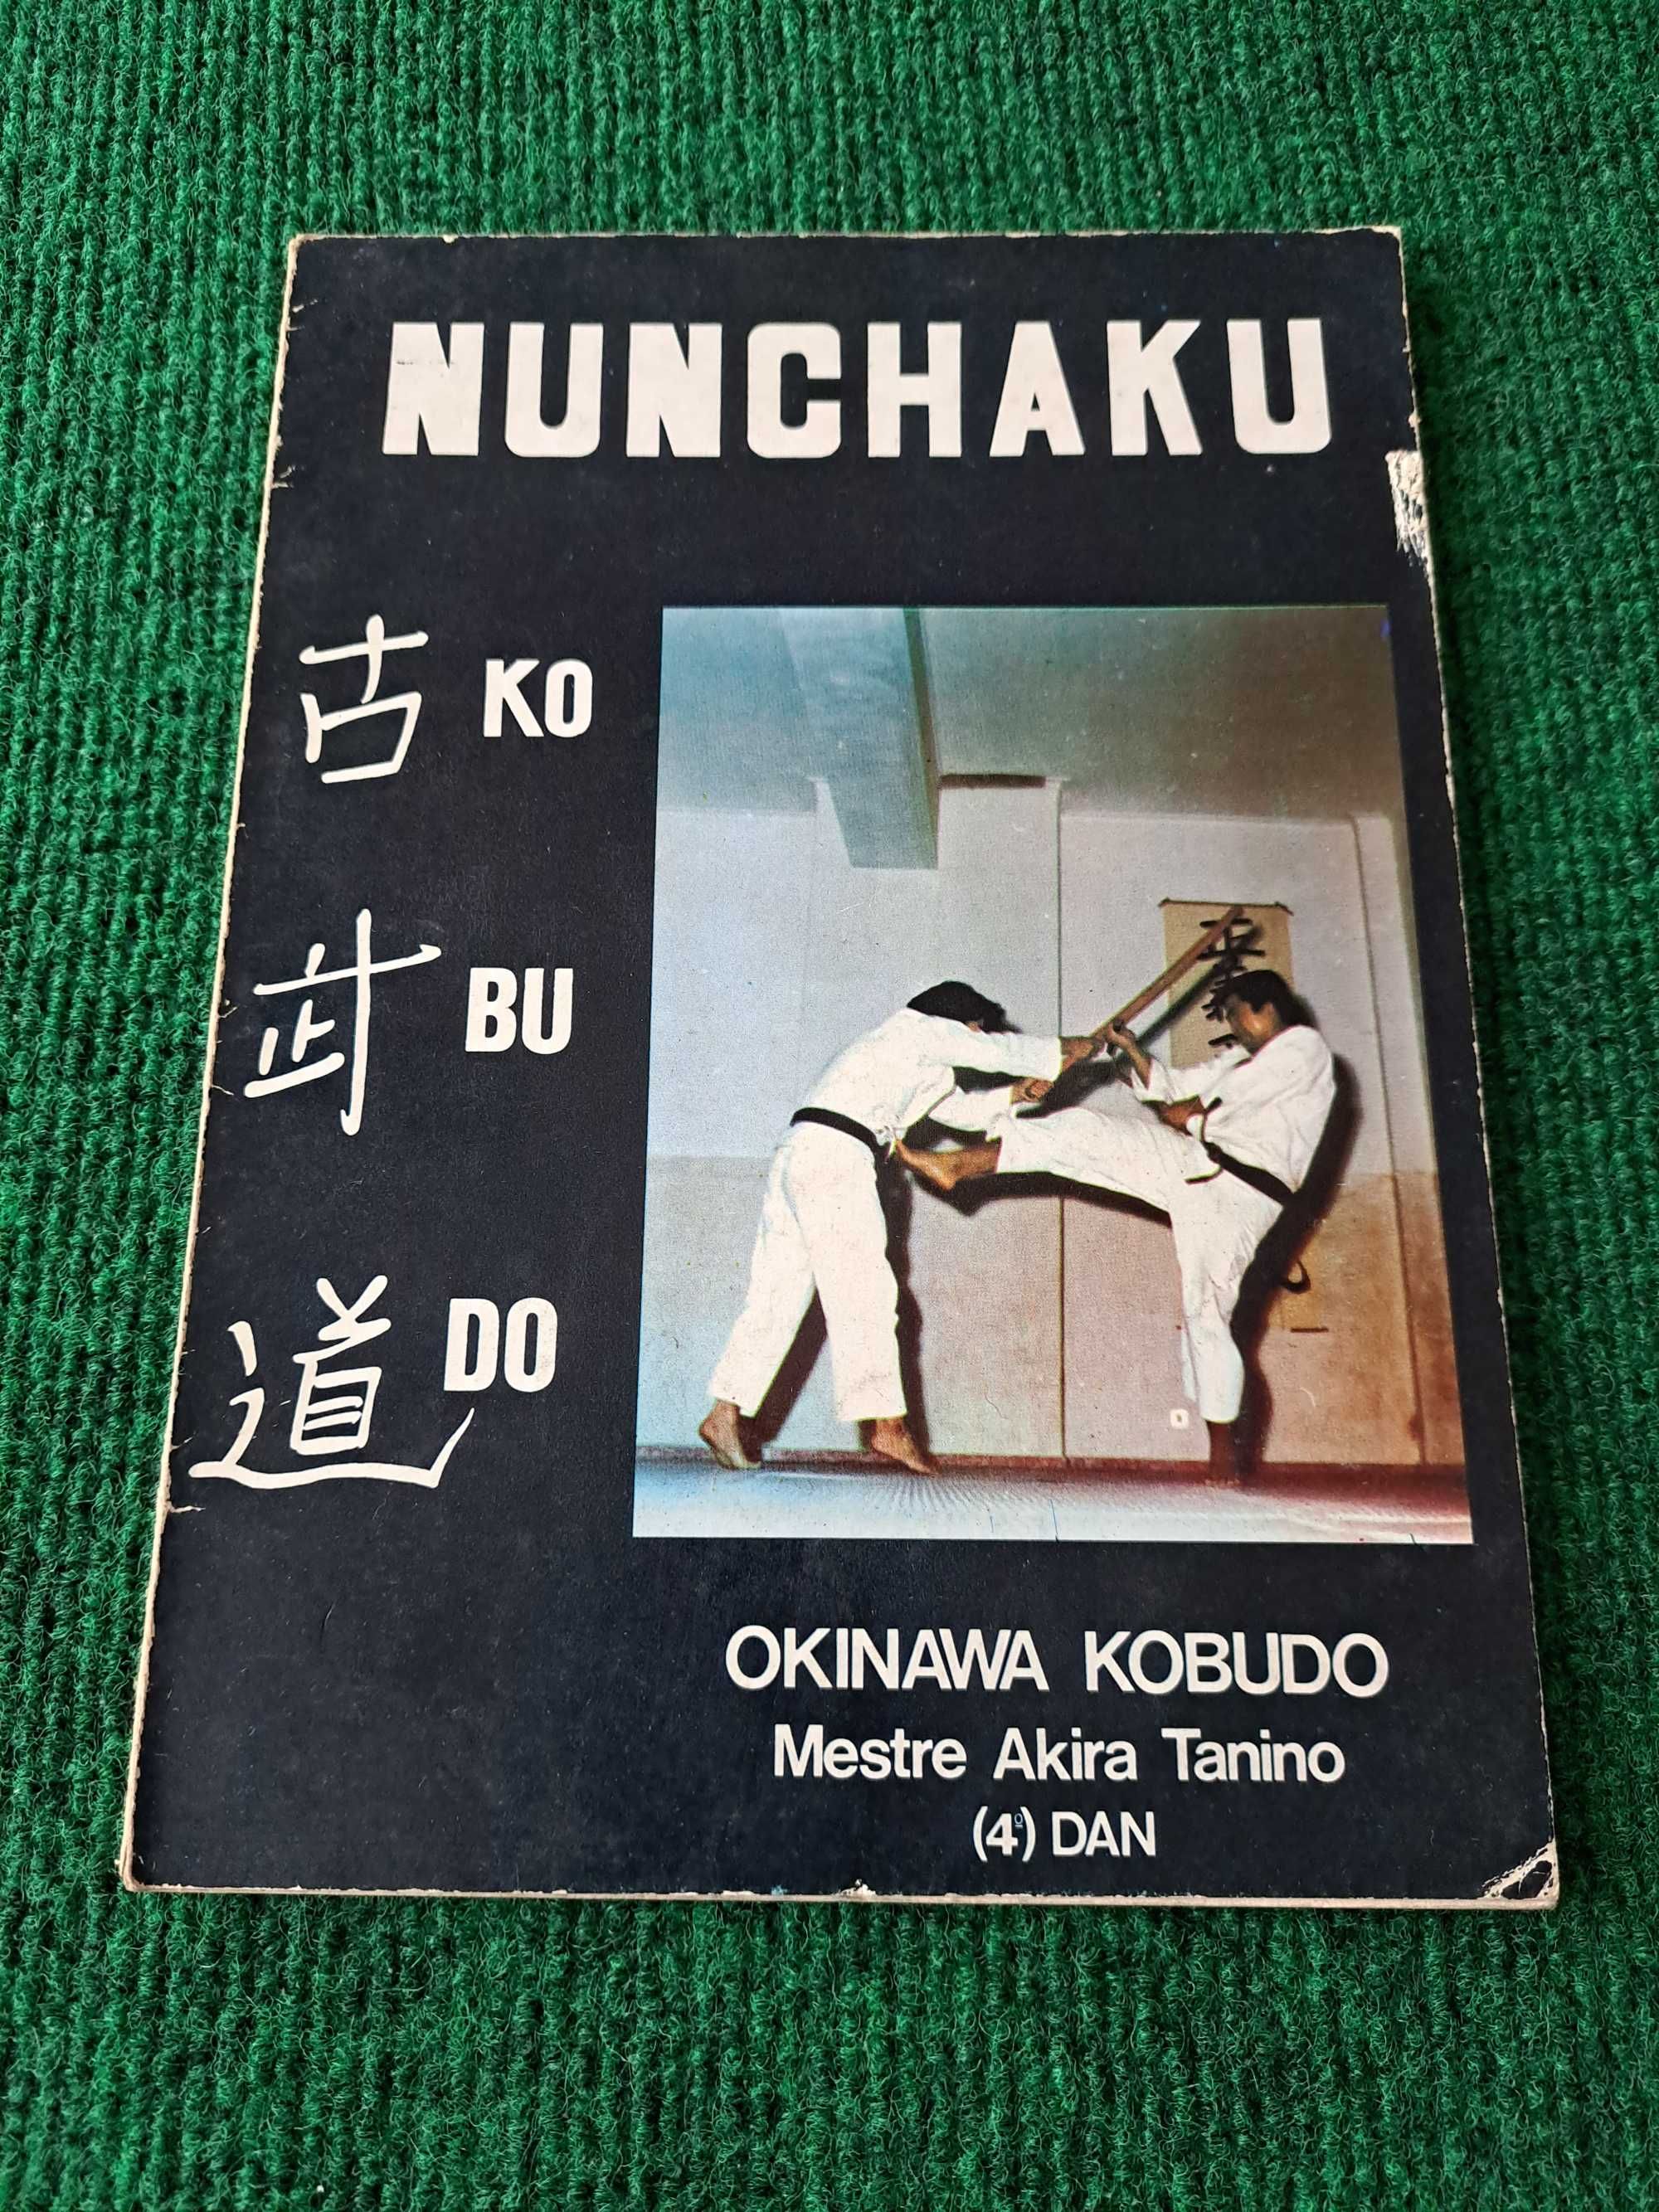 Nunchaku - Okinawa Kobudo - Mestre Akira Tanino (4) DAN